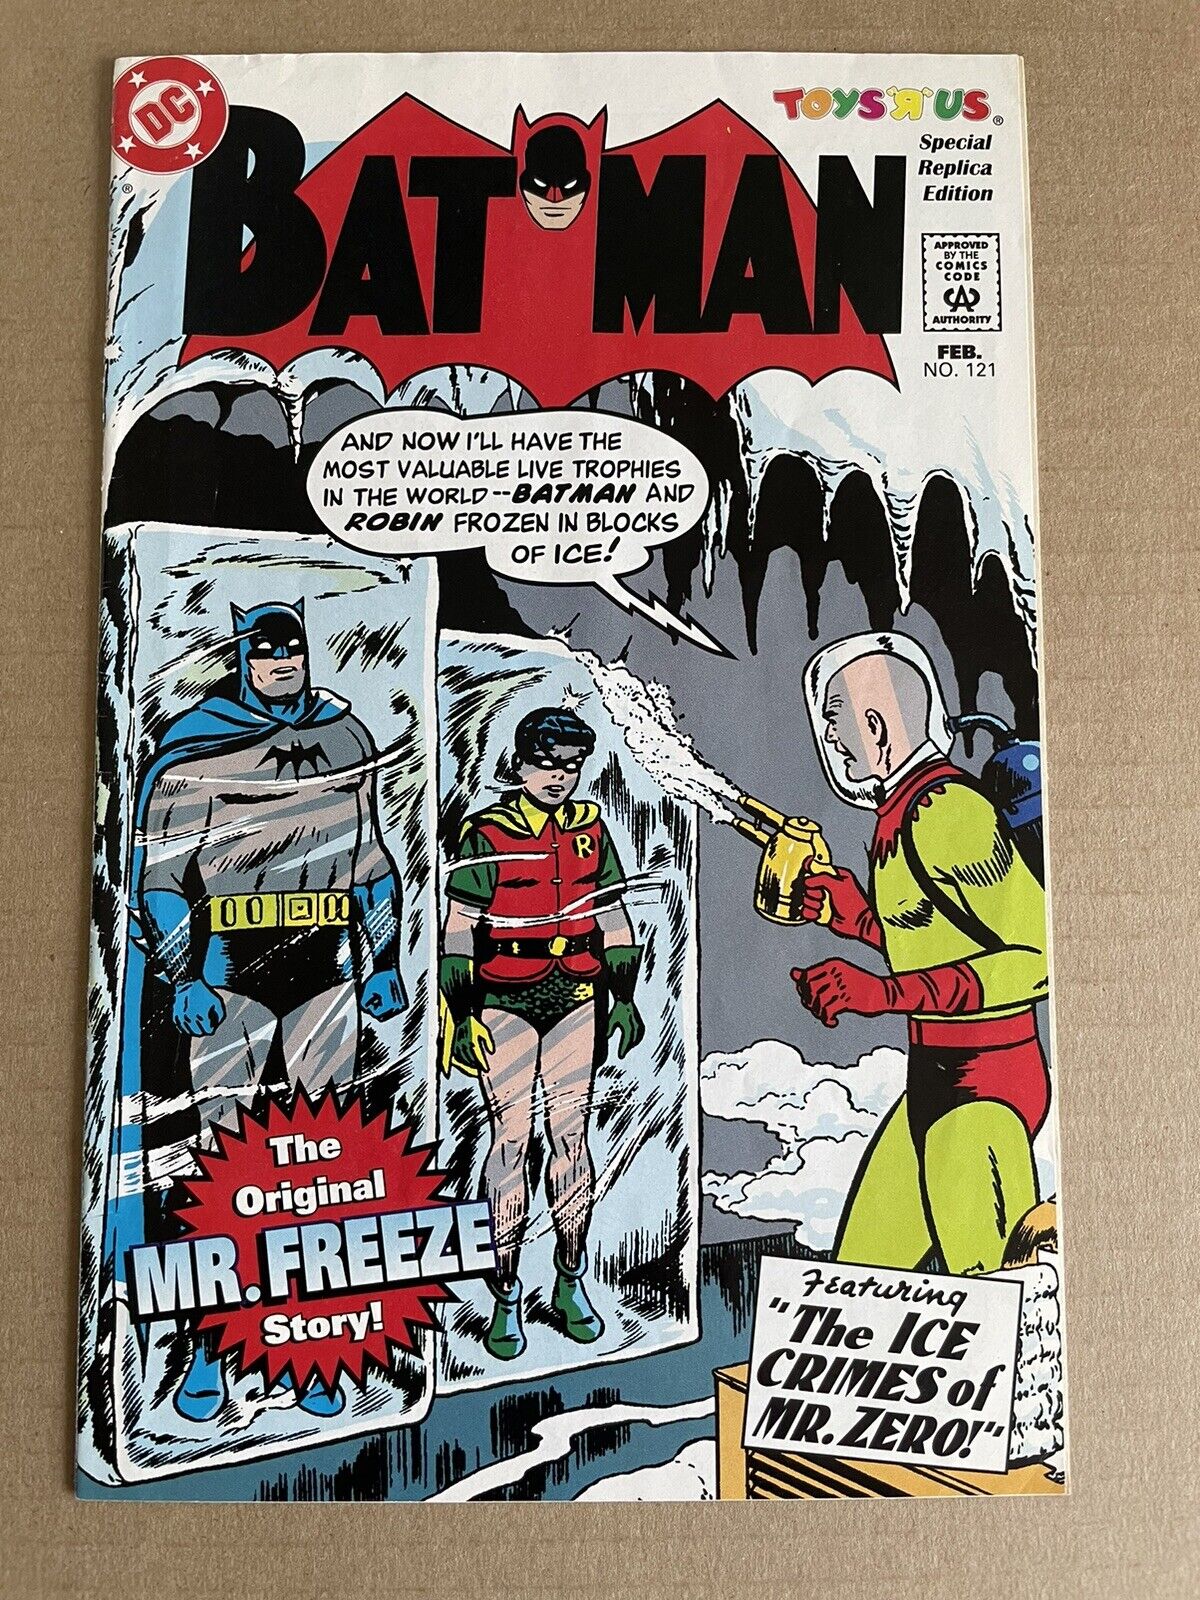 Batman #121 comic book ~ Toys-R-Us exclusive Special Replica Edition